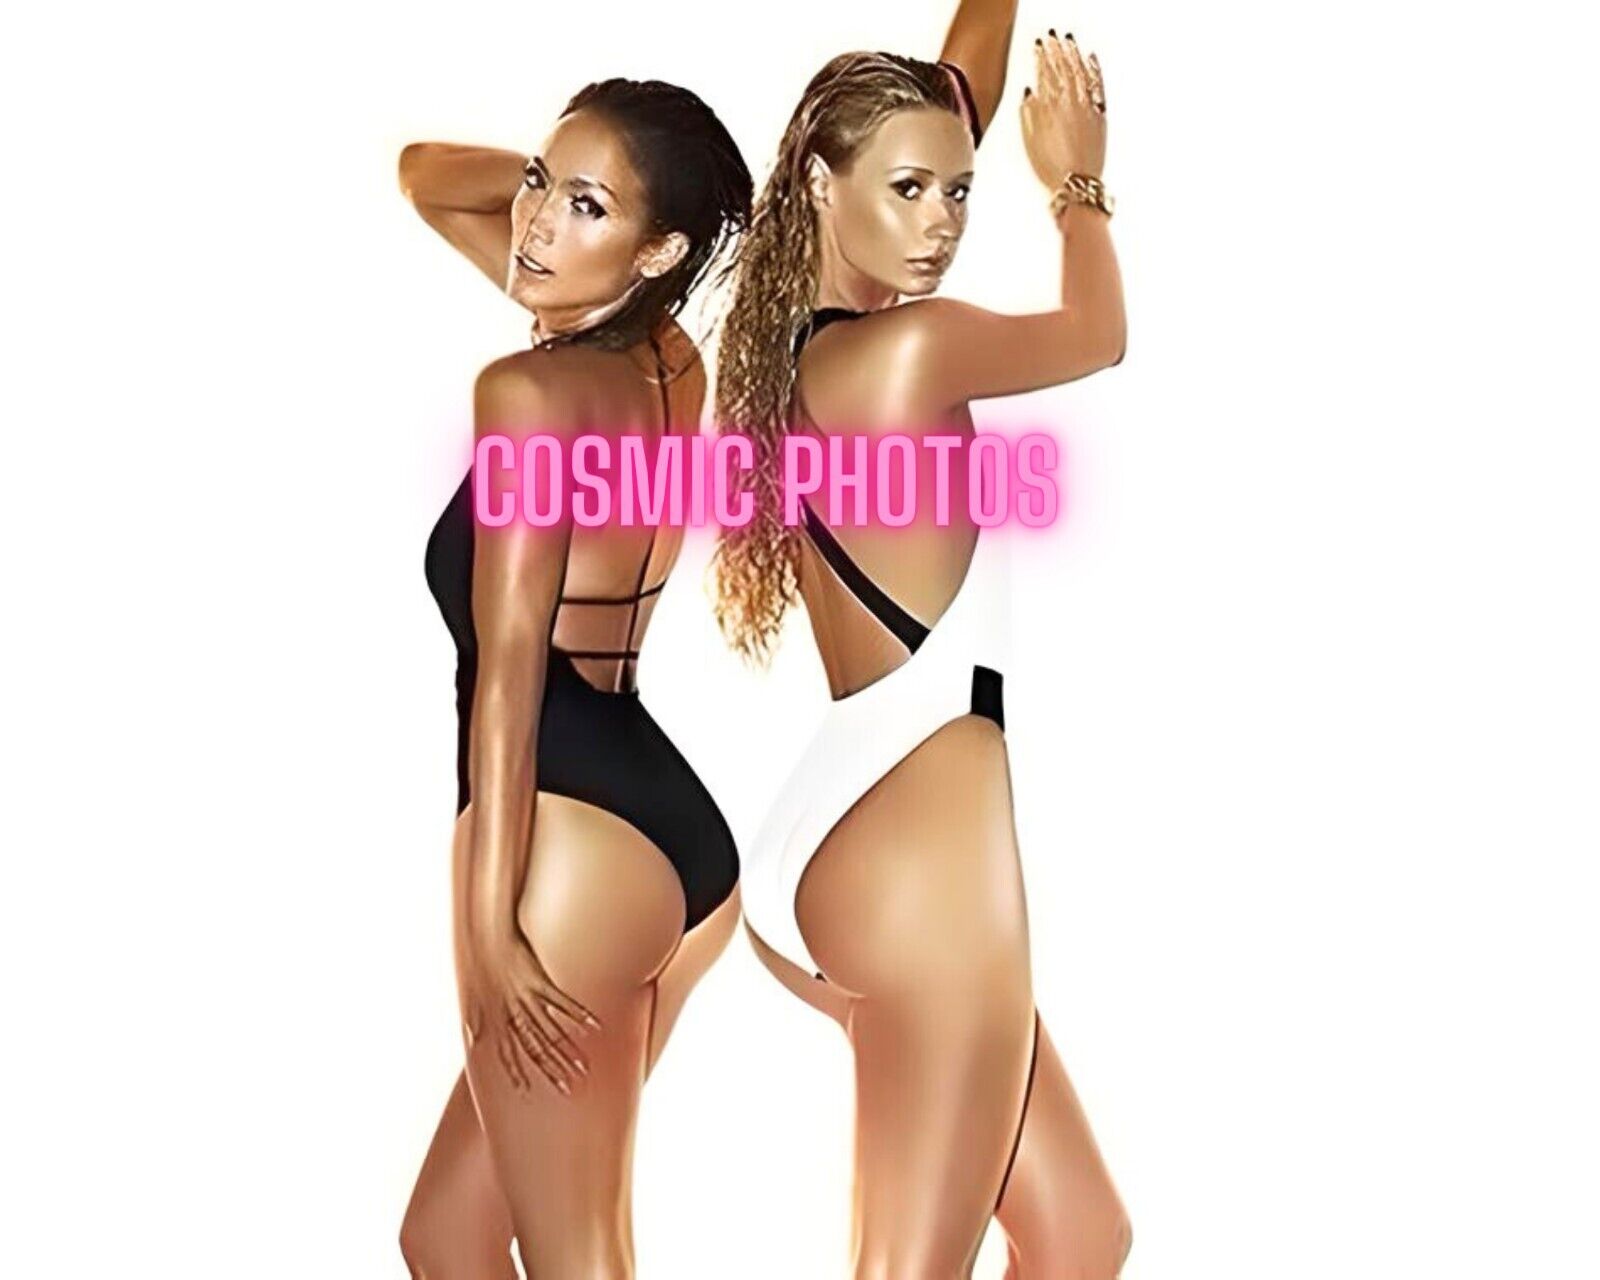 Jennifer Lopez And Iggy Azalea 10x8 inch  Glossy Photo Print #00191